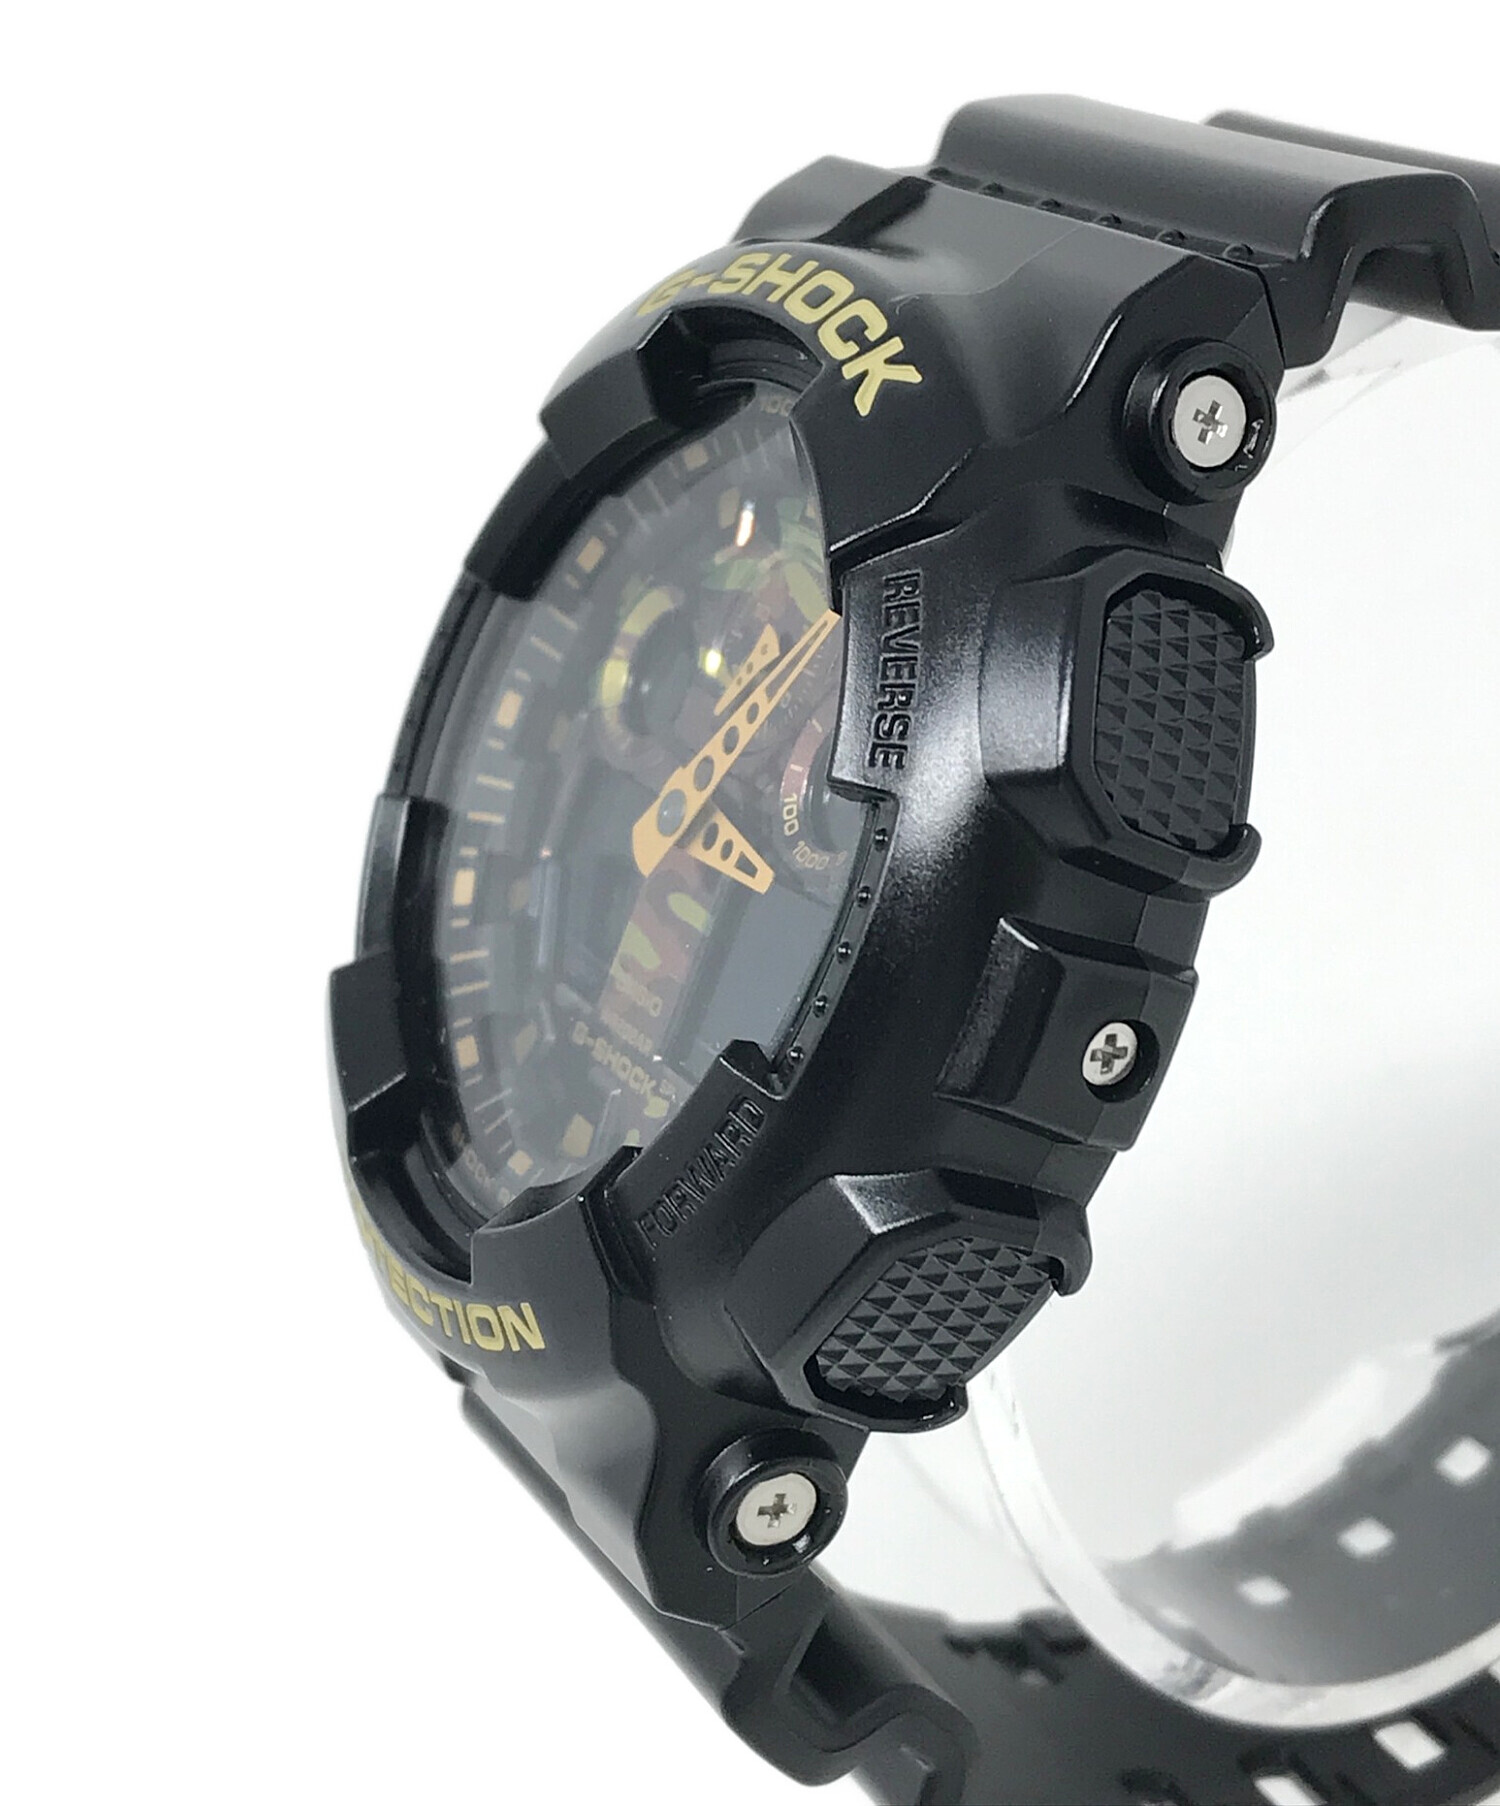 CASIO (カシオ) デジアナウォッチ G-SHOCK(ジーショック) クォーツ 腕時計 サイズ:実寸サイズにてご確認ください。